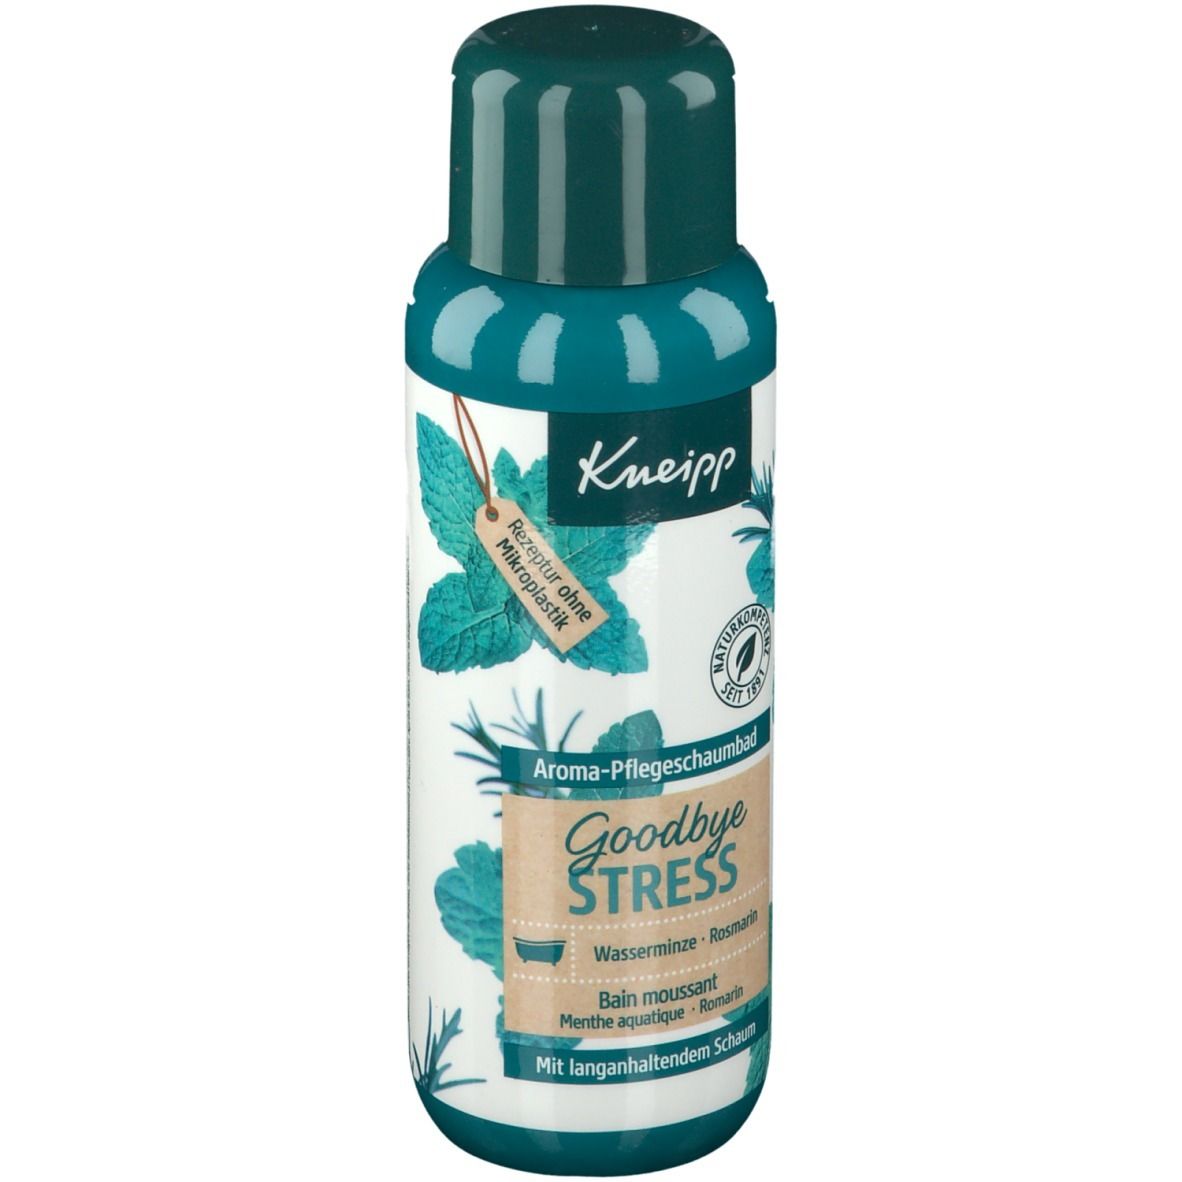 Kneipp® Aroma-Pflegeschaumbad Goodbye Stress